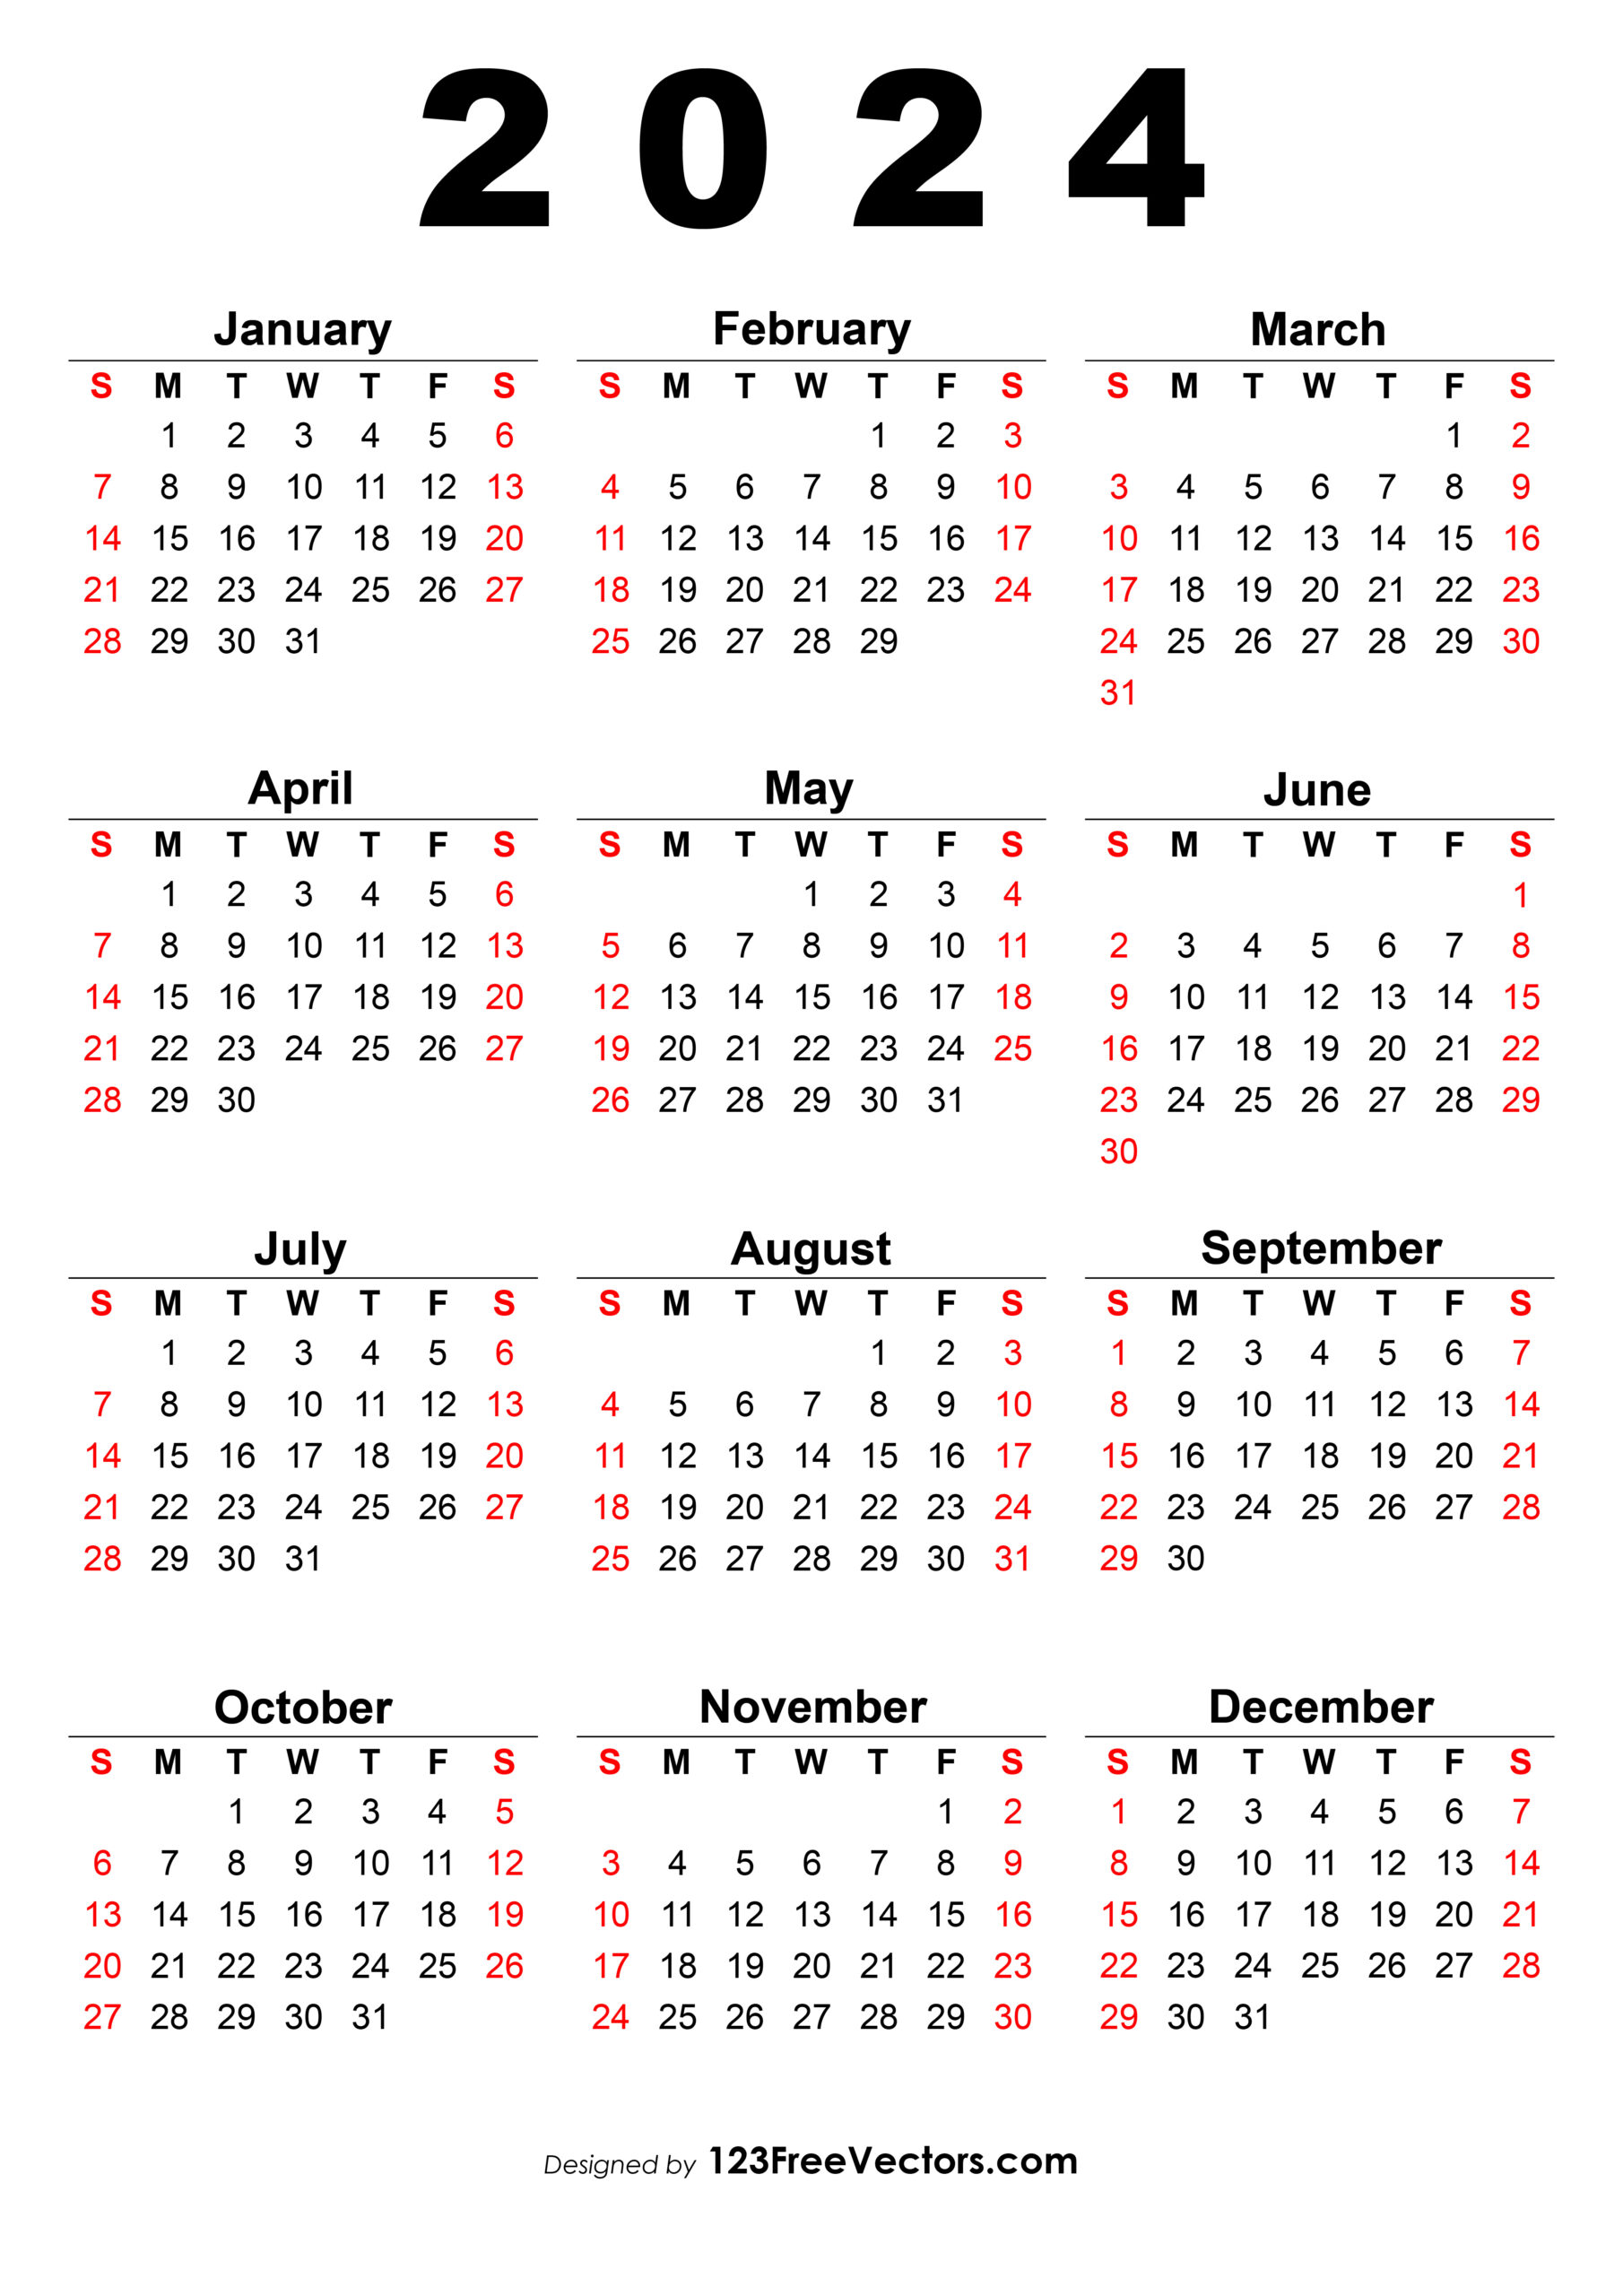 Free 2024 Calendar One Page | Free 2024 Printable Calendar One Page